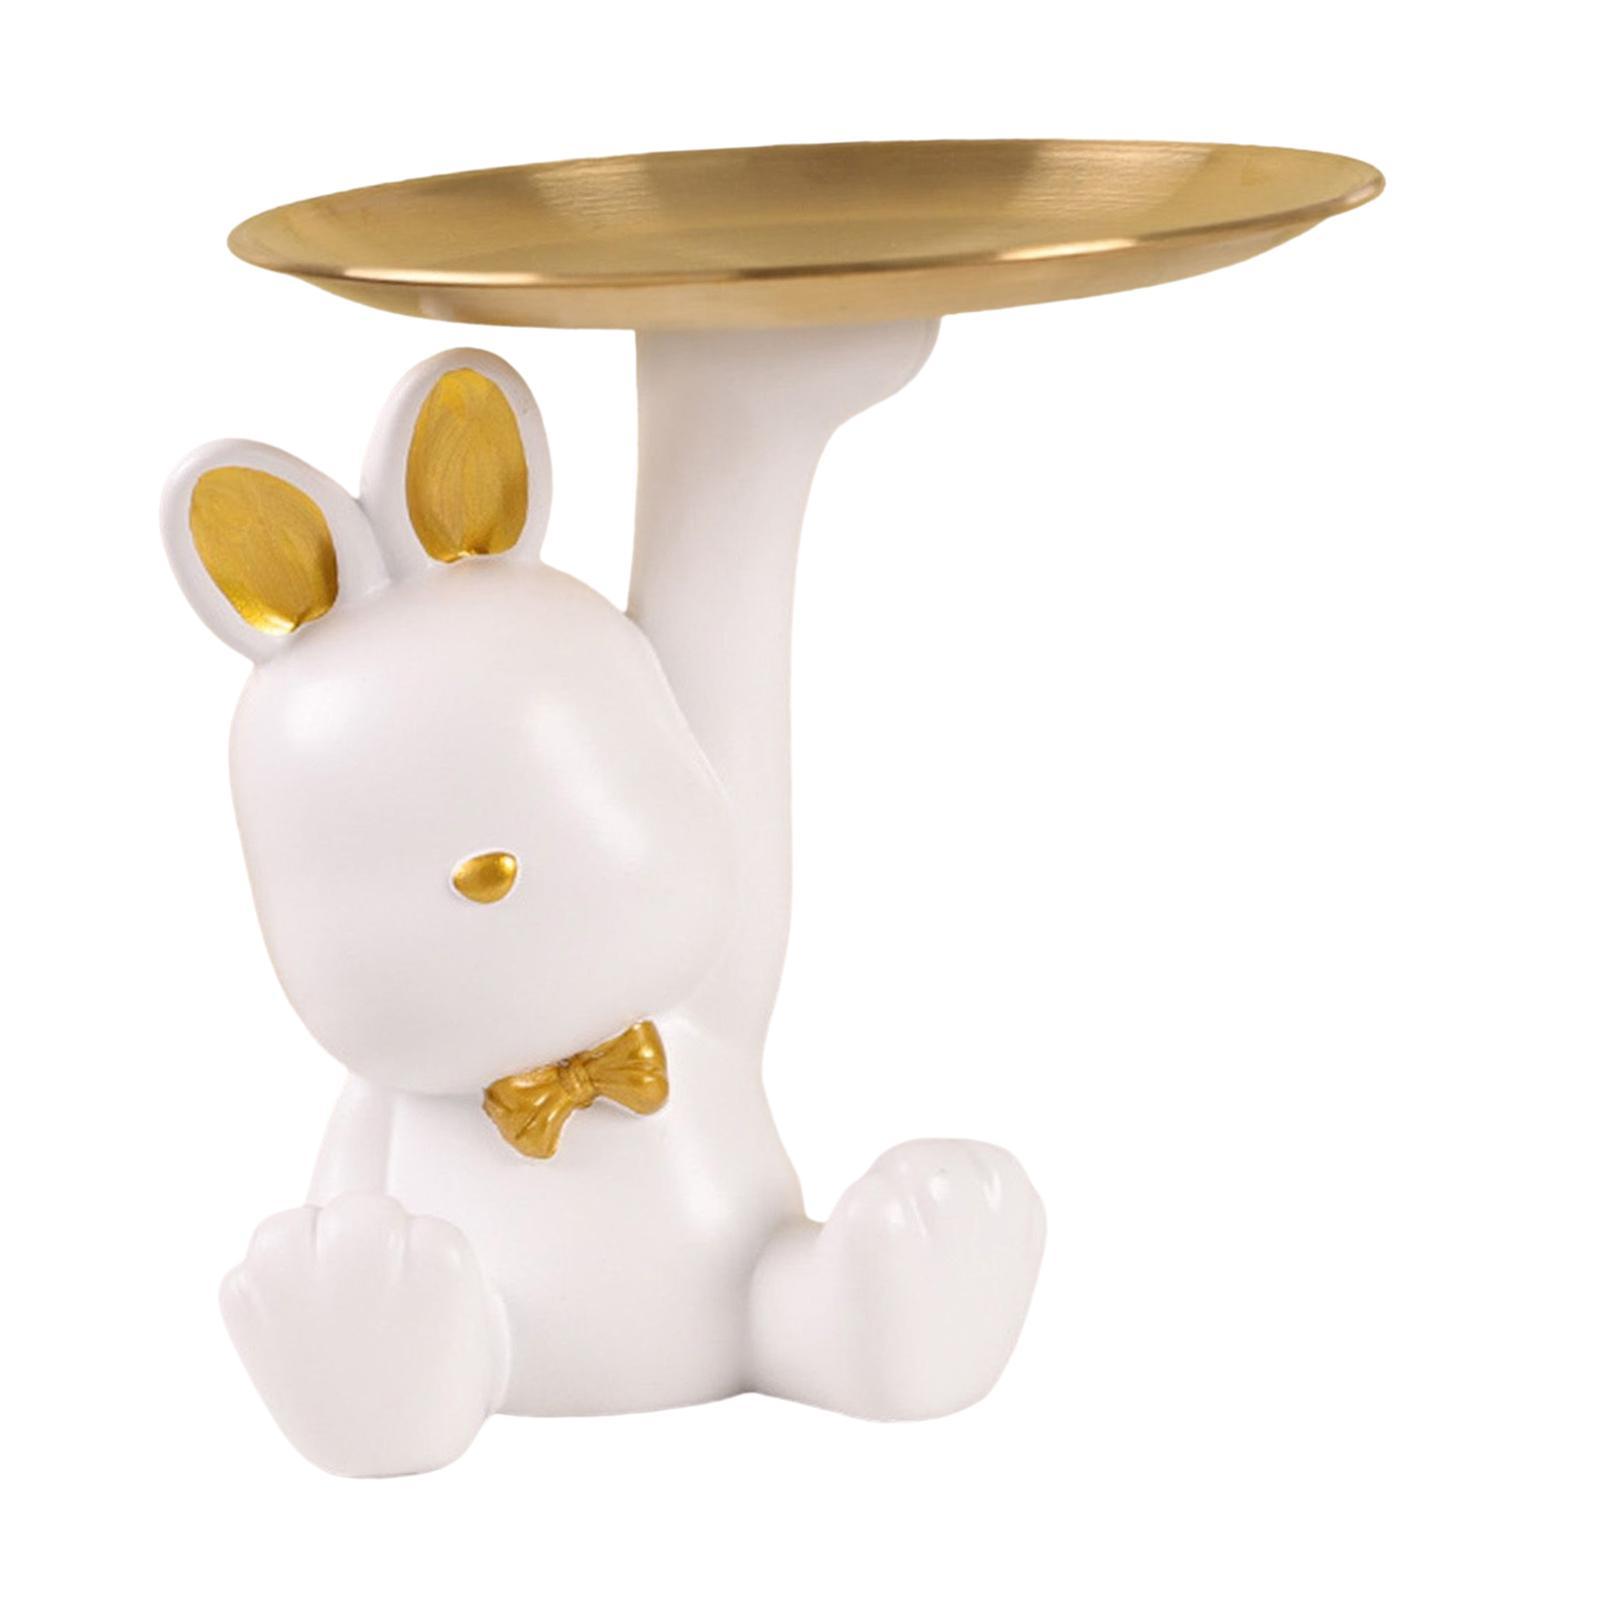 Rabbit Figurines Modern Statue Ornament for Living Room Housewarming Bedroom